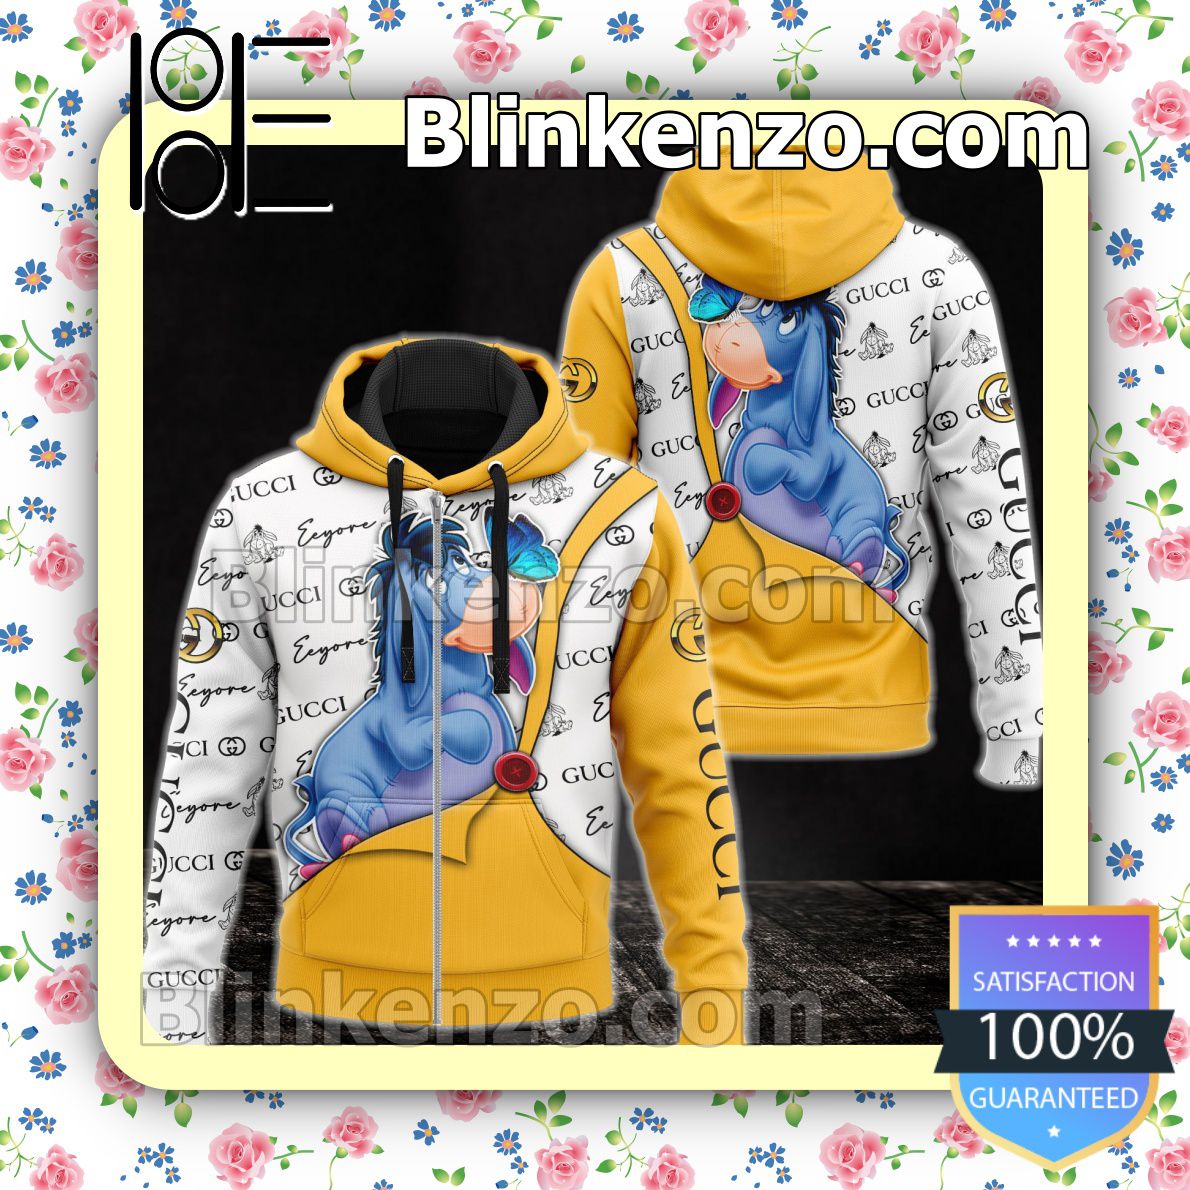 eBay Gucci With Eeyore Winnie The Pooh Full-Zip Hooded Fleece Sweatshirt